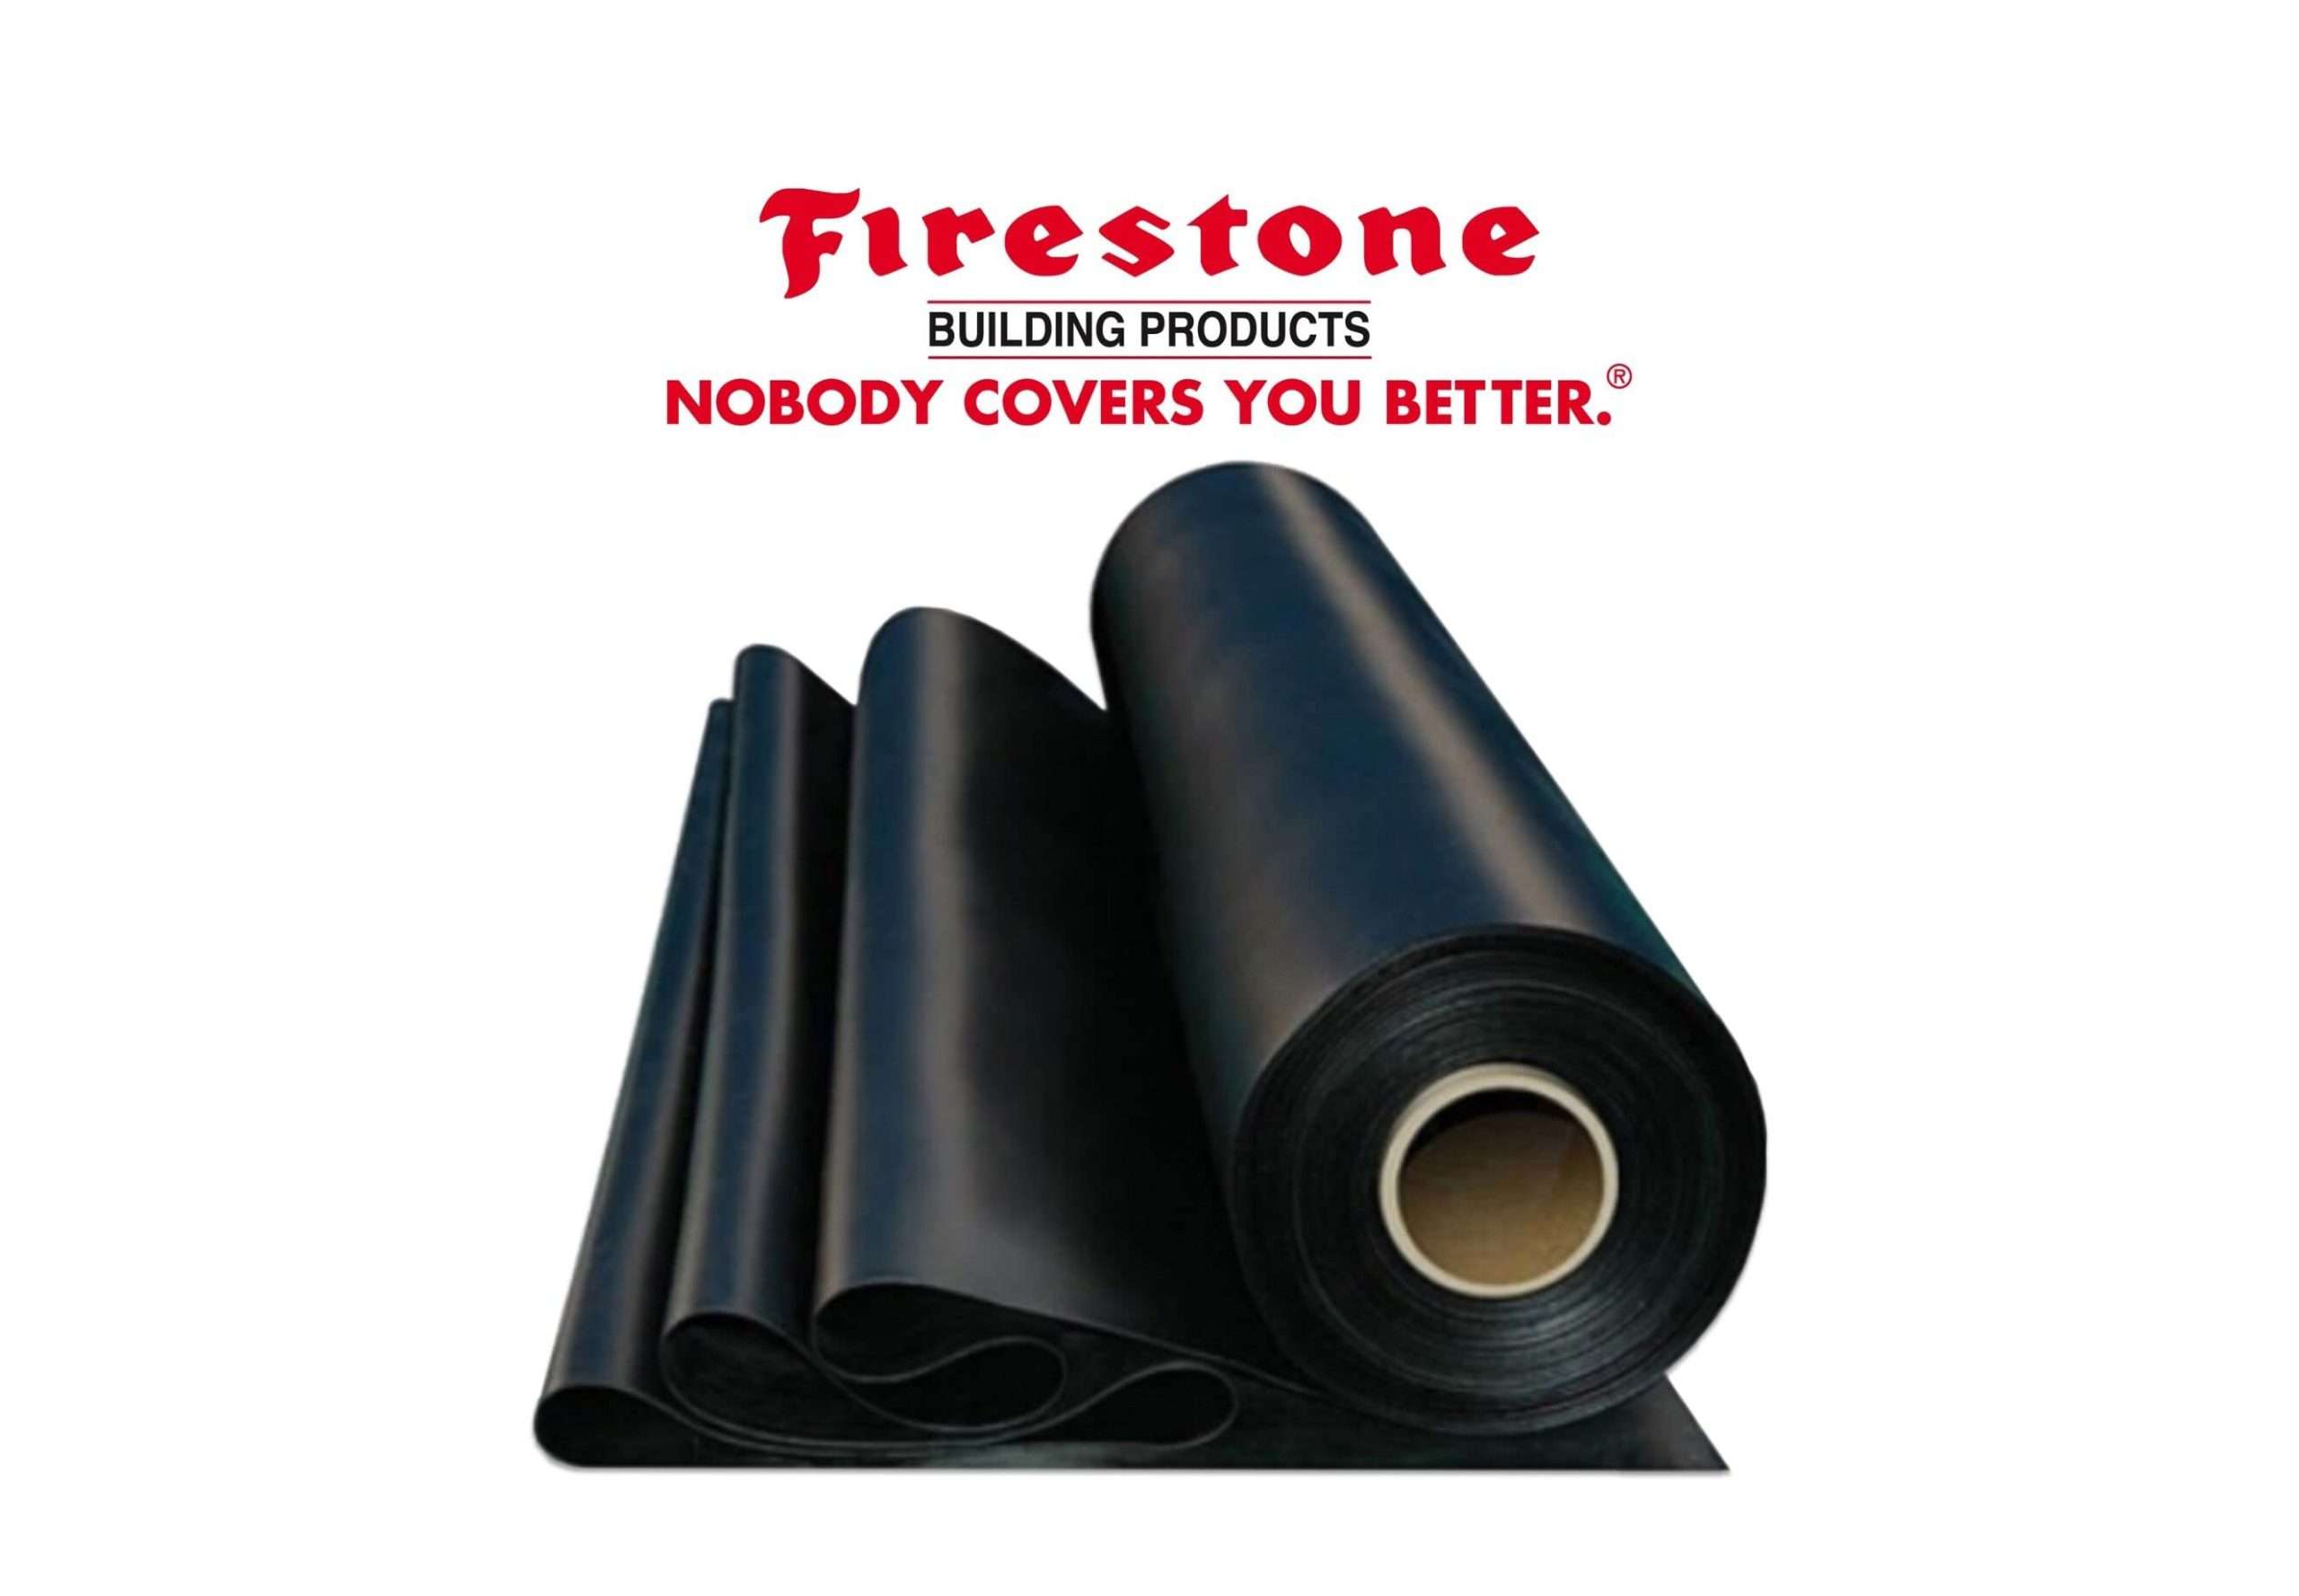 Firestone - what else?